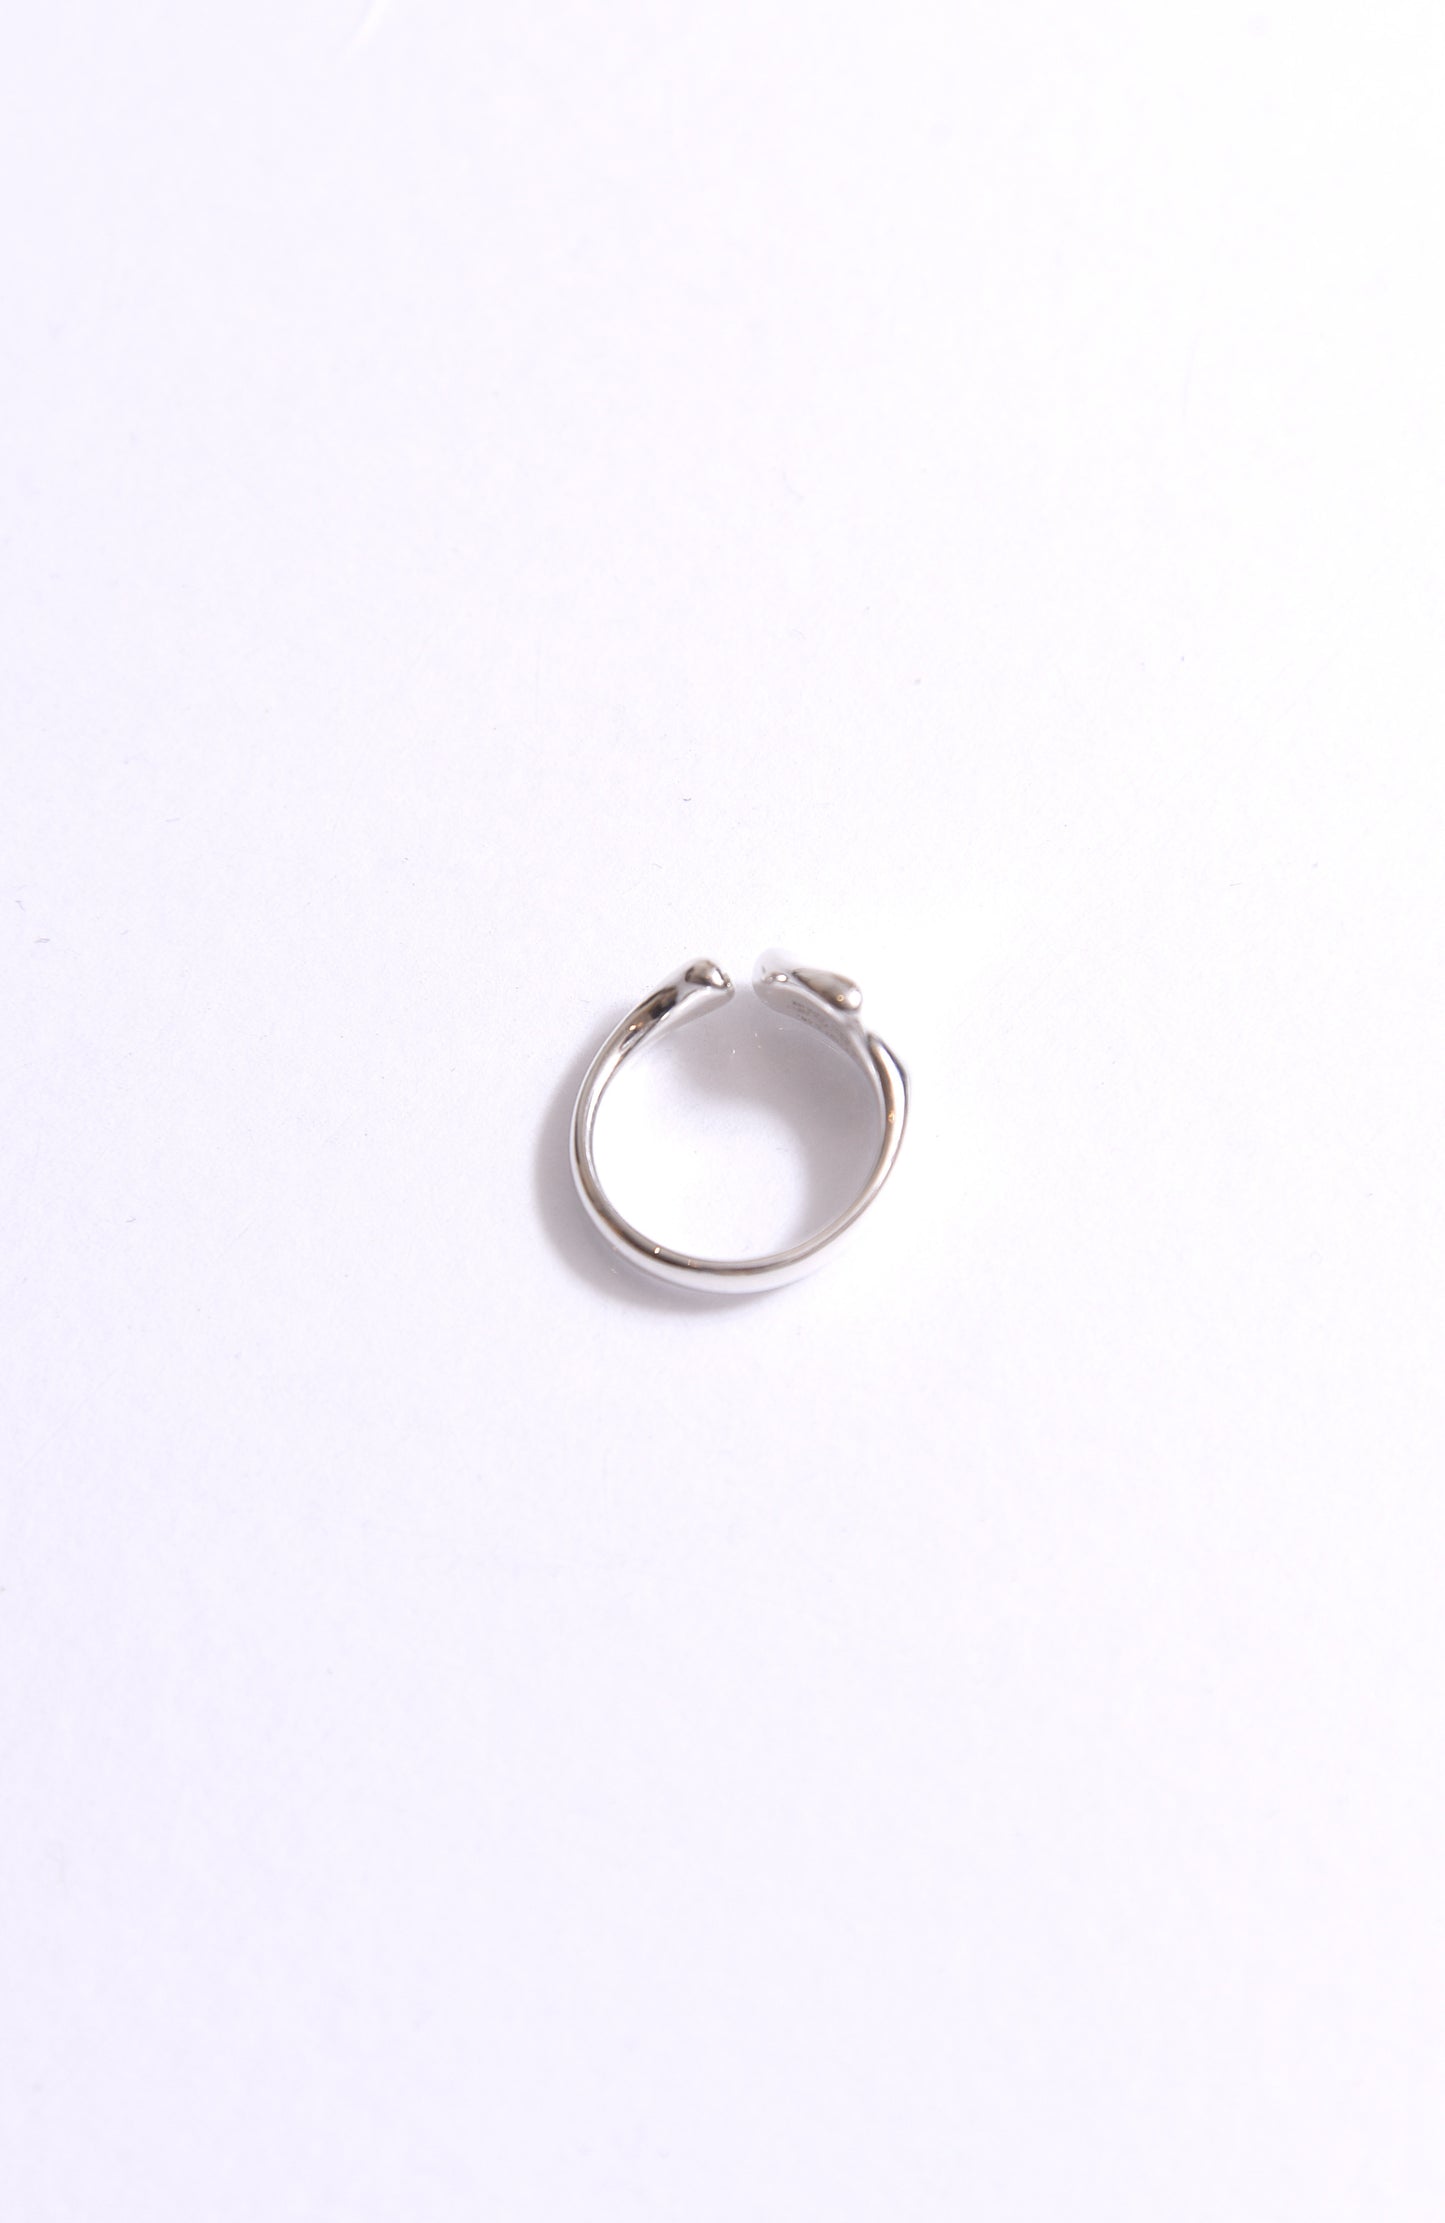 Tiffany,co vintage  motif ring